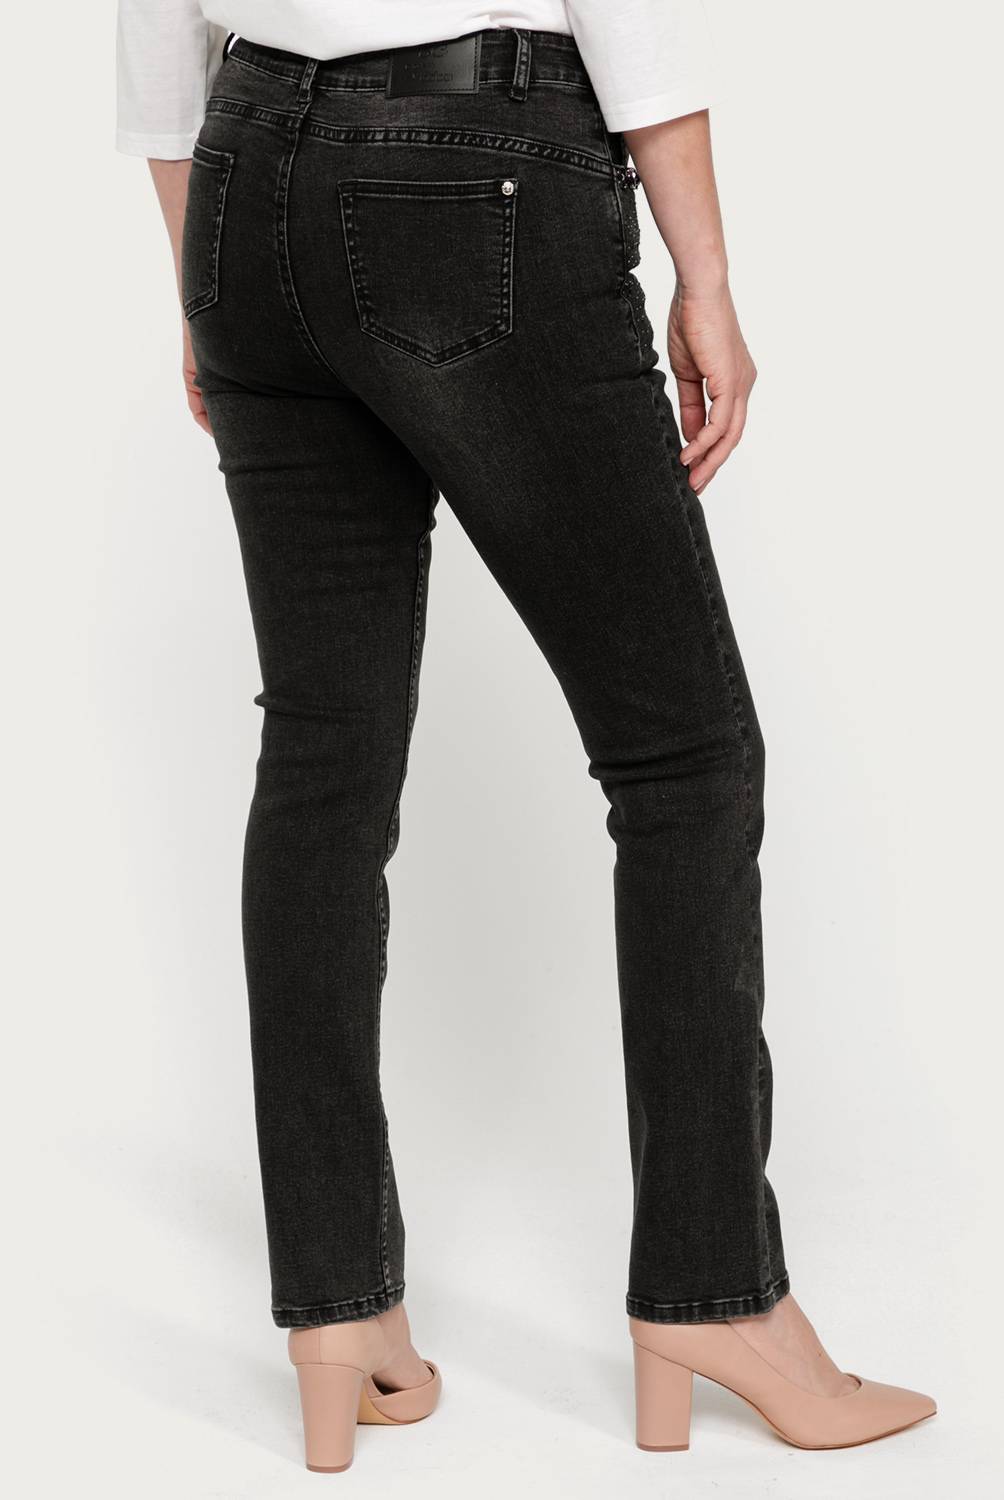 STEFANO COCCI - Jeans Mujer